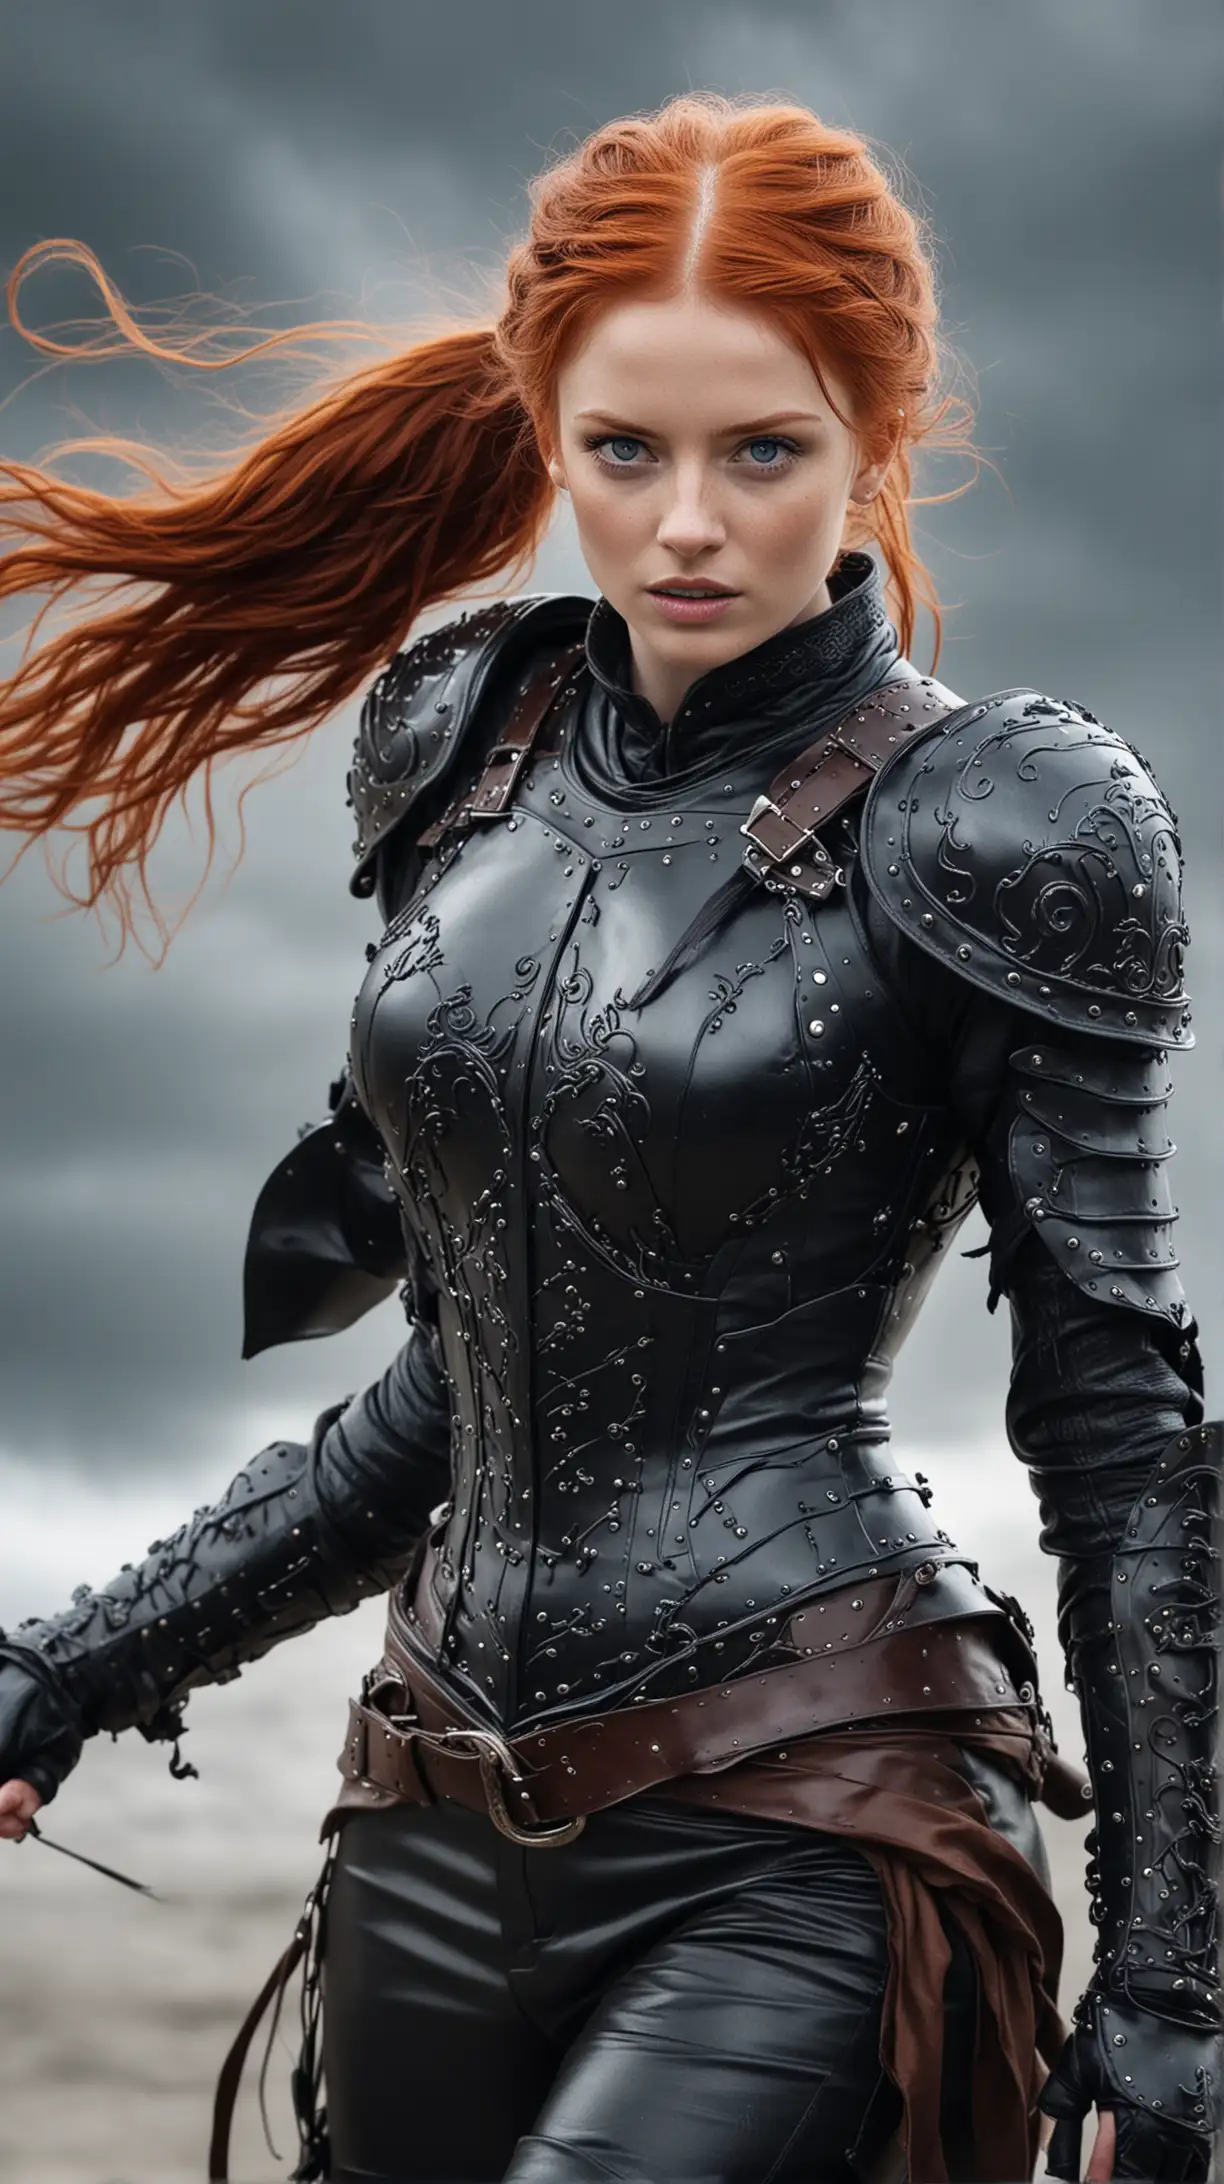 Redheaded Warrior Woman in Leather Armor Battling Swirling Black Winds